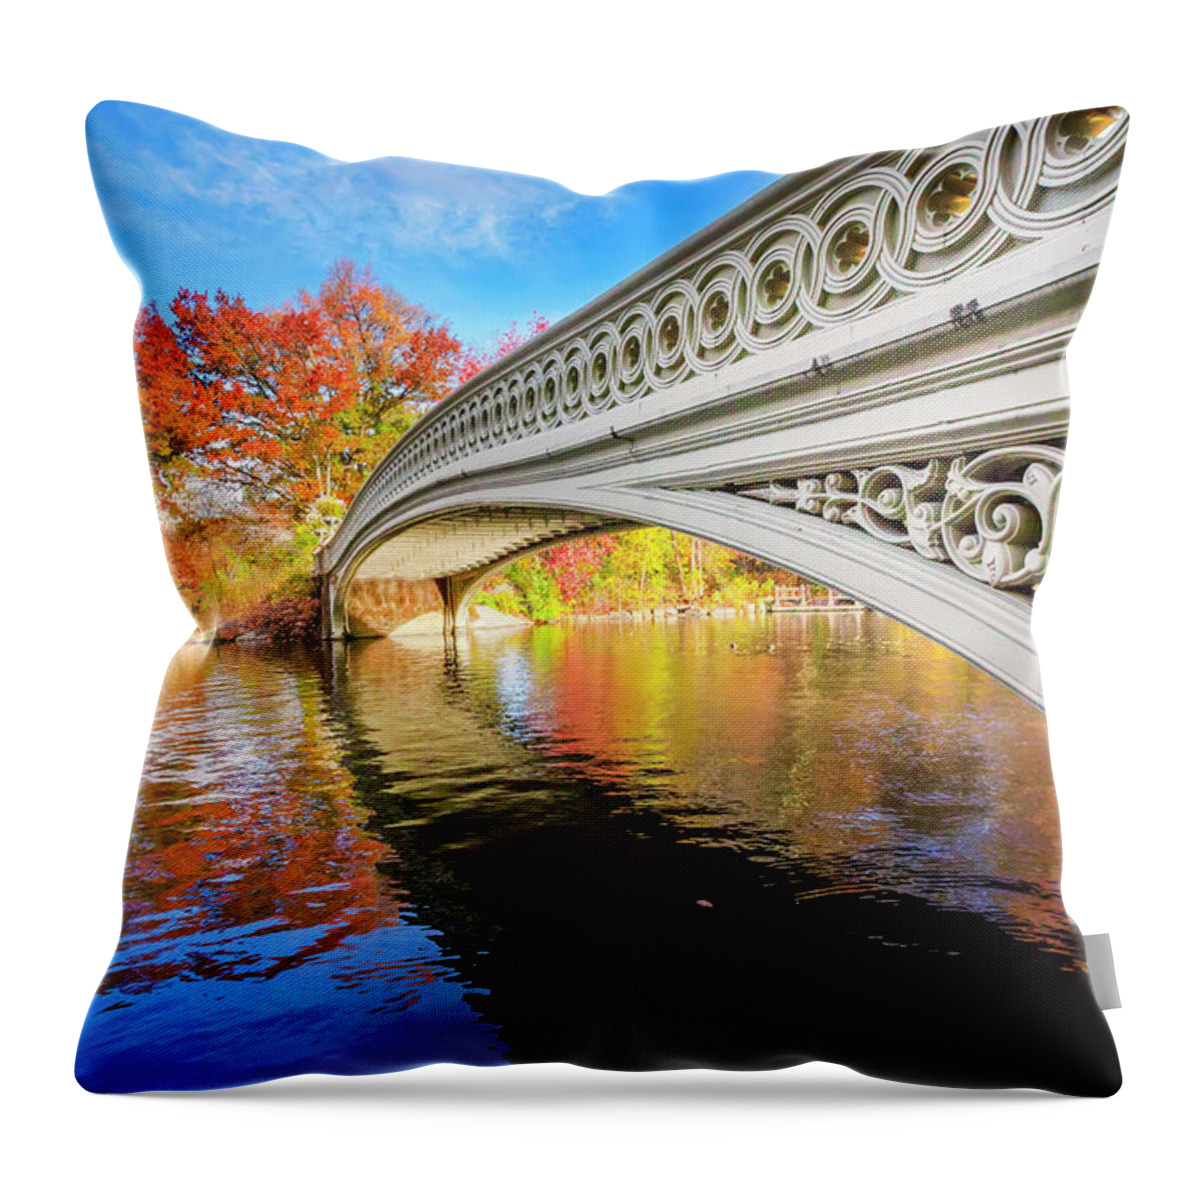 Estock Throw Pillow featuring the digital art Bow Bridge In Central Park, Manhattan #5 by Claudia Uripos